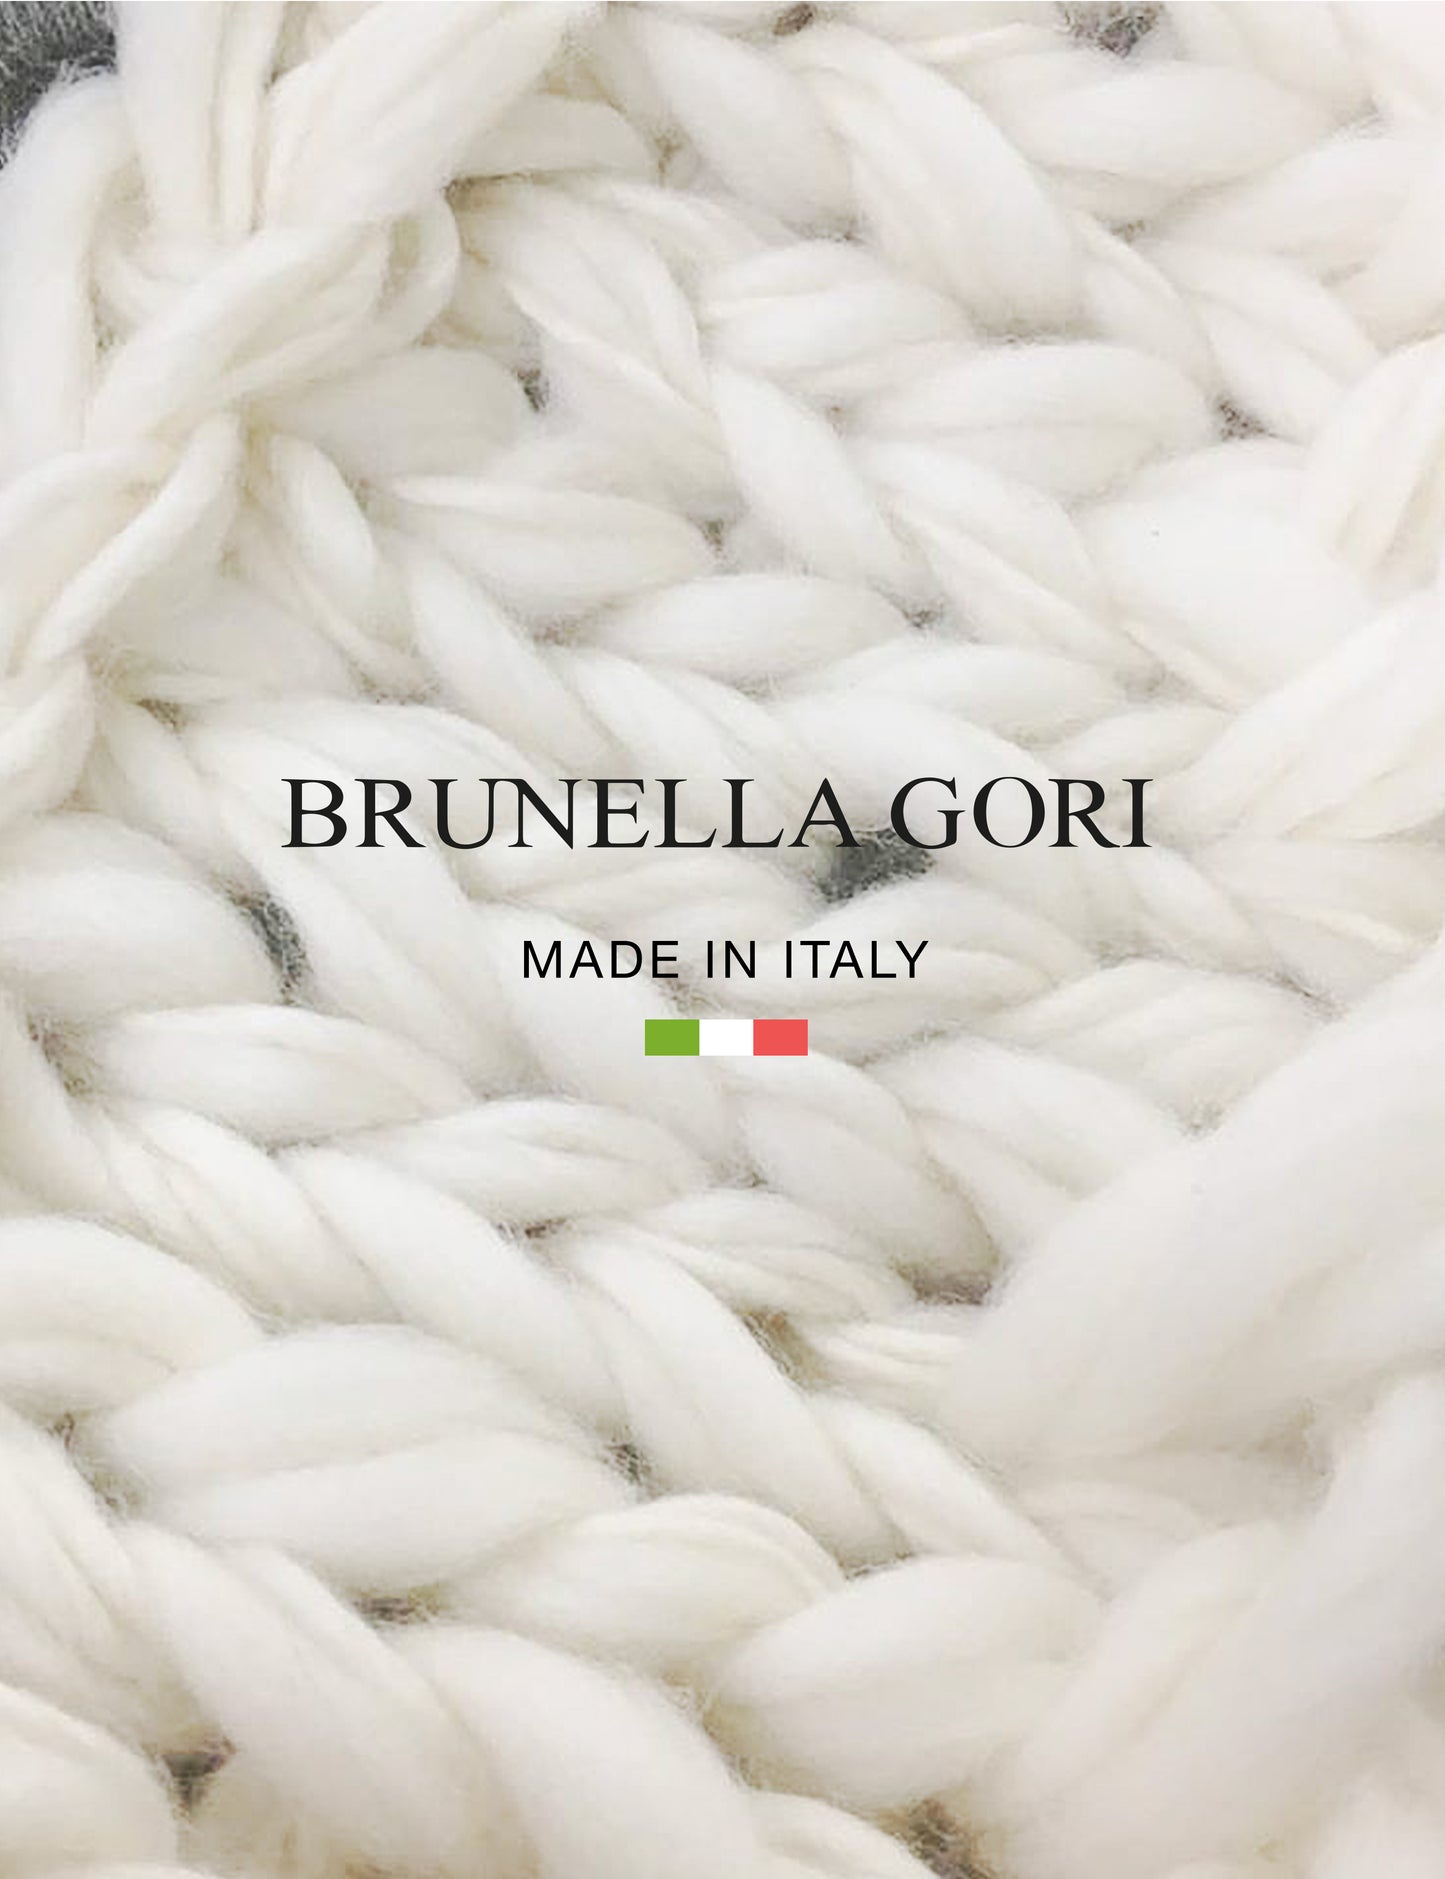 Maglione Cardigan - Uomo, Autunno/Inverno - 100% Lana Vergine Merino Extrafine Mulessing Free - 100% Made in Italy | Brunella Gori